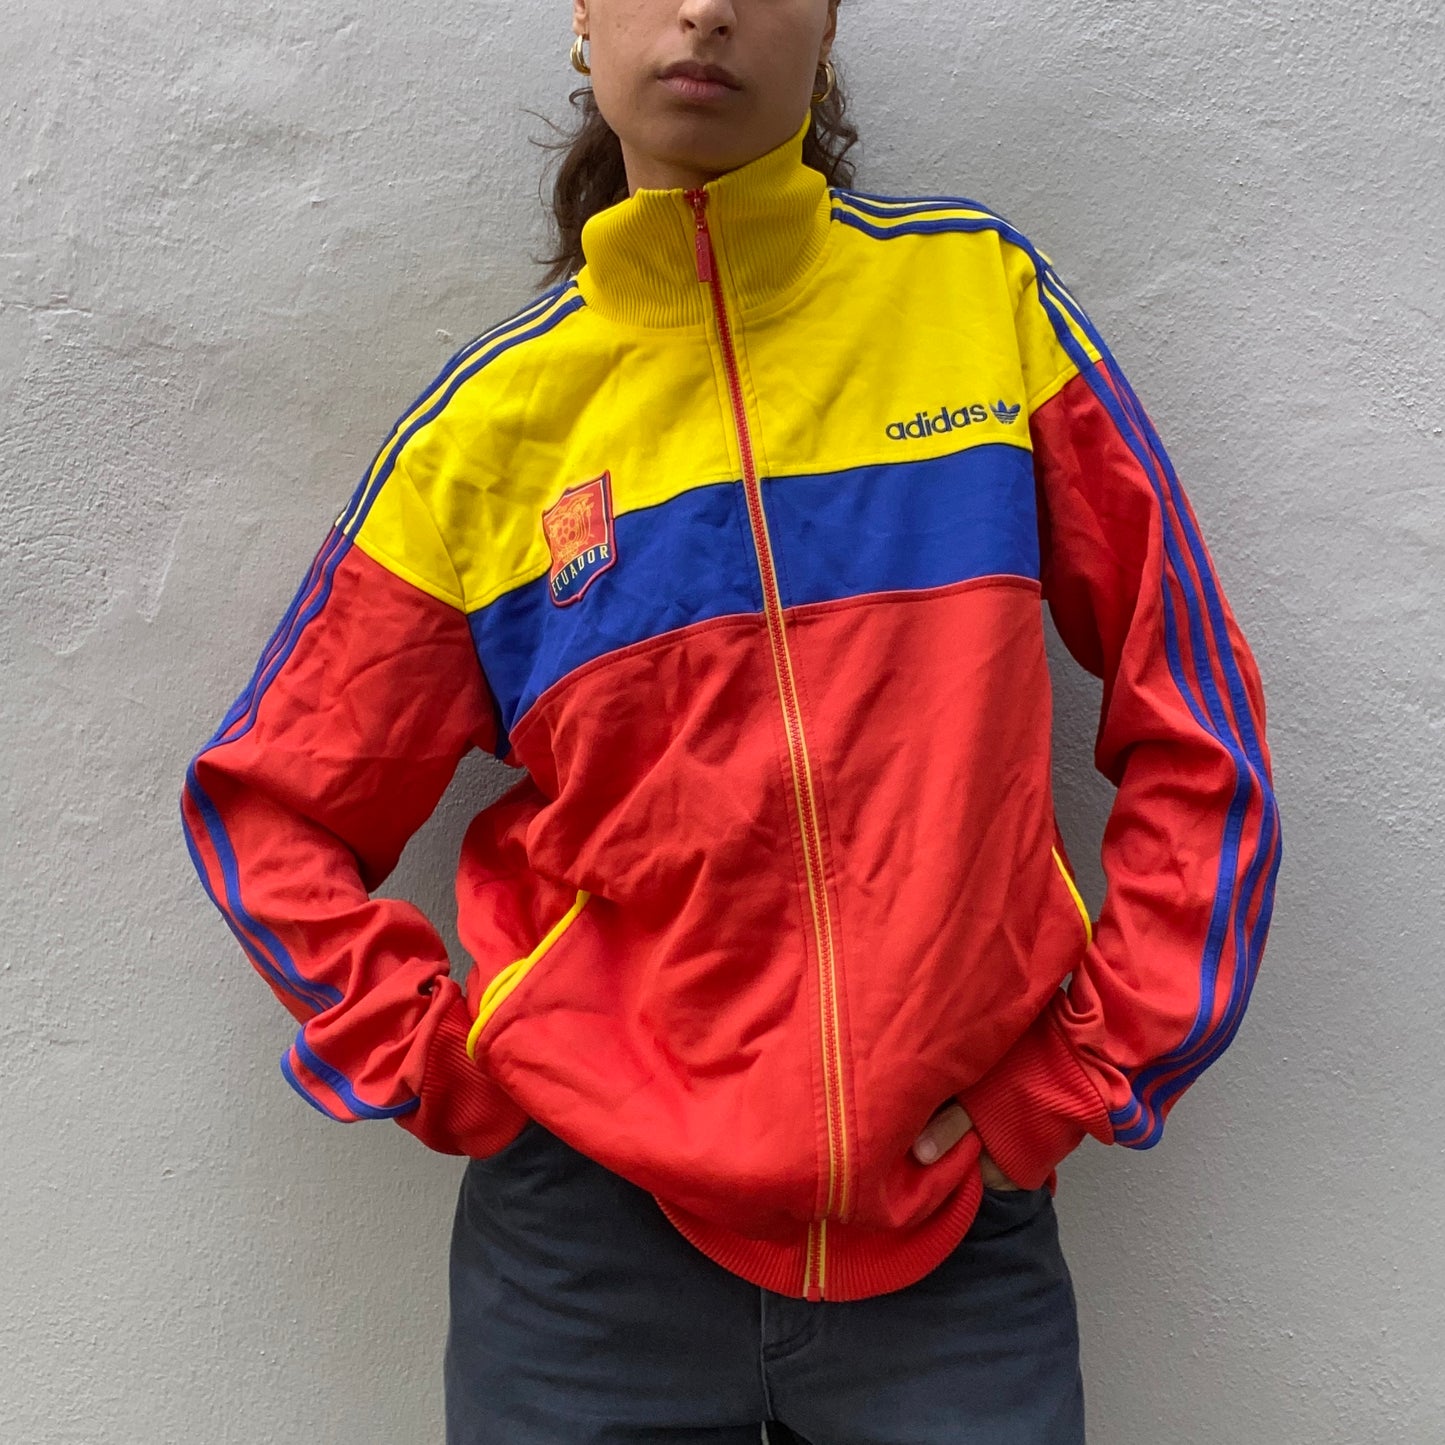 Ecuador Adidas Track Suit Front